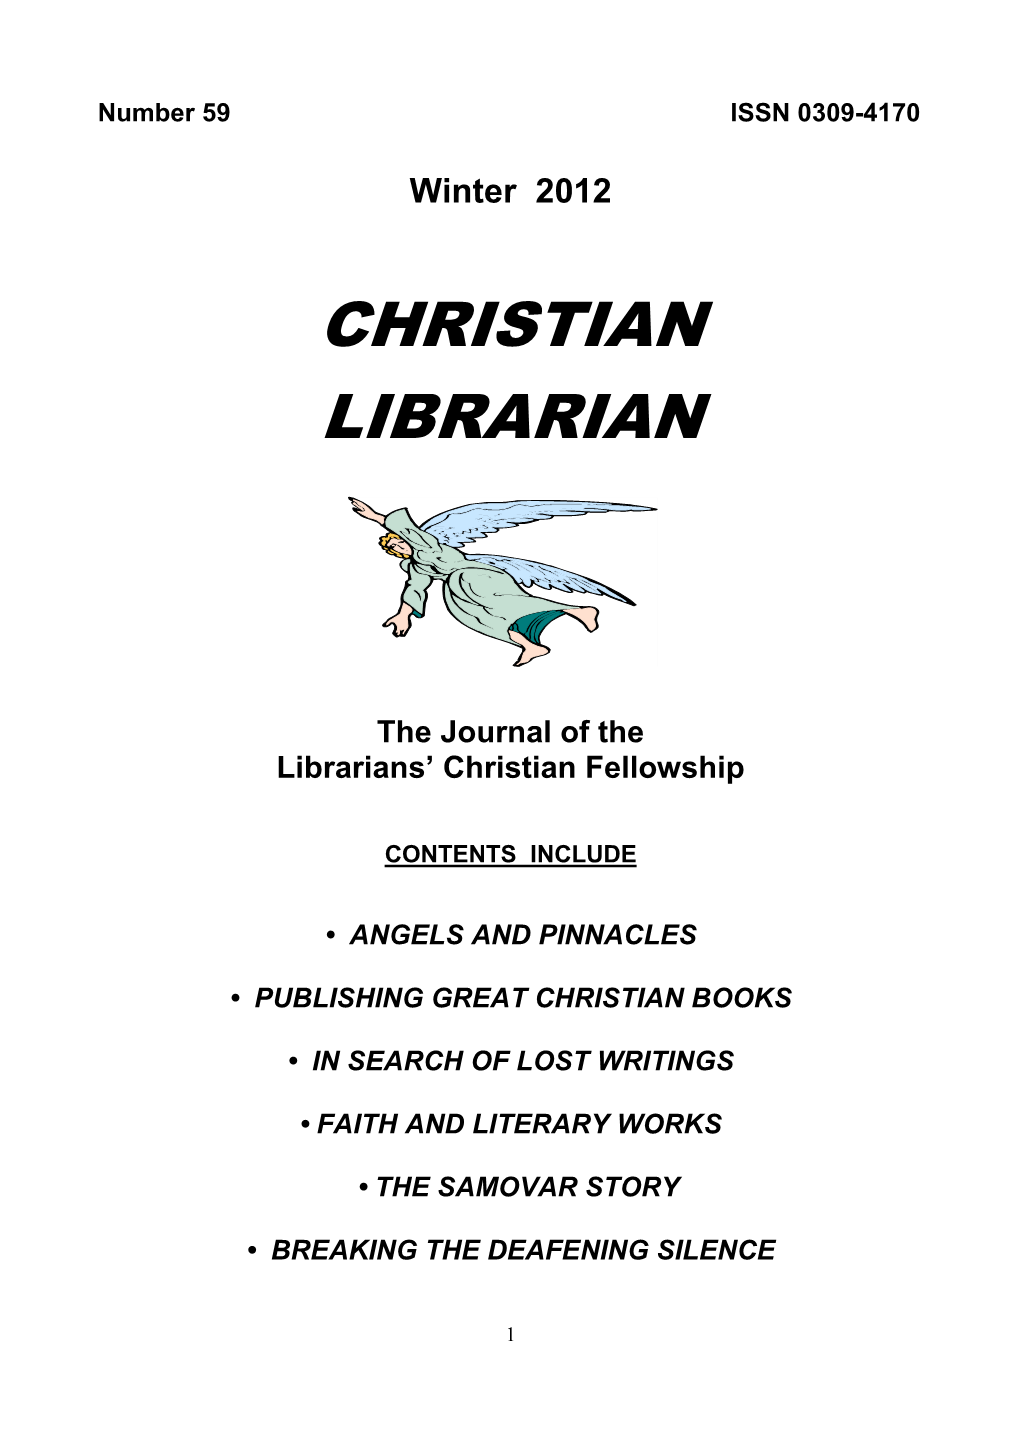 Christian Librarian Winter 2012